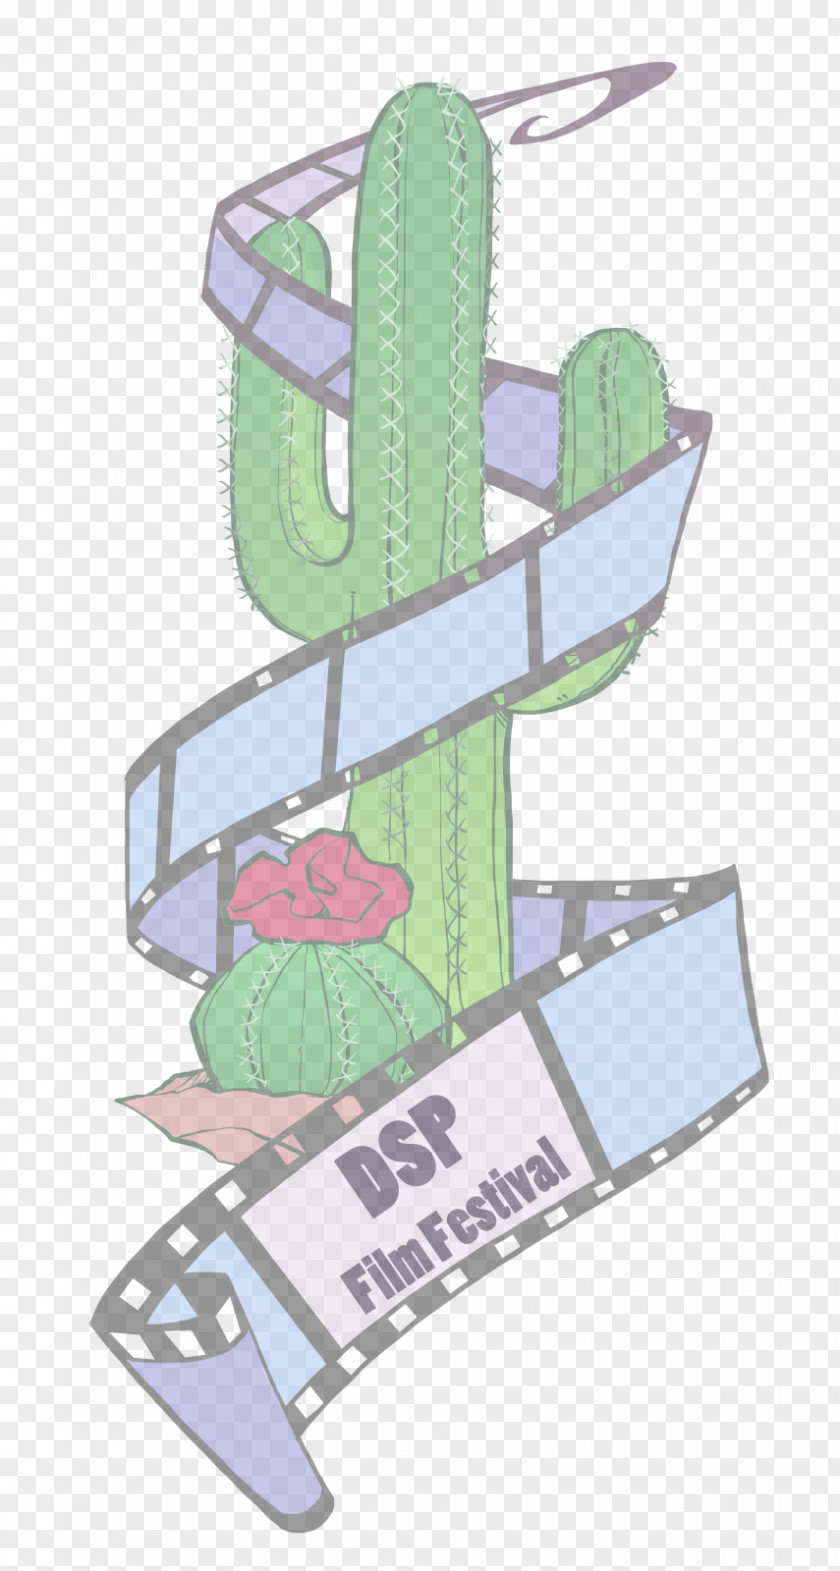 Arizona Cactus Laws Illustration Product Design Cartoon PNG